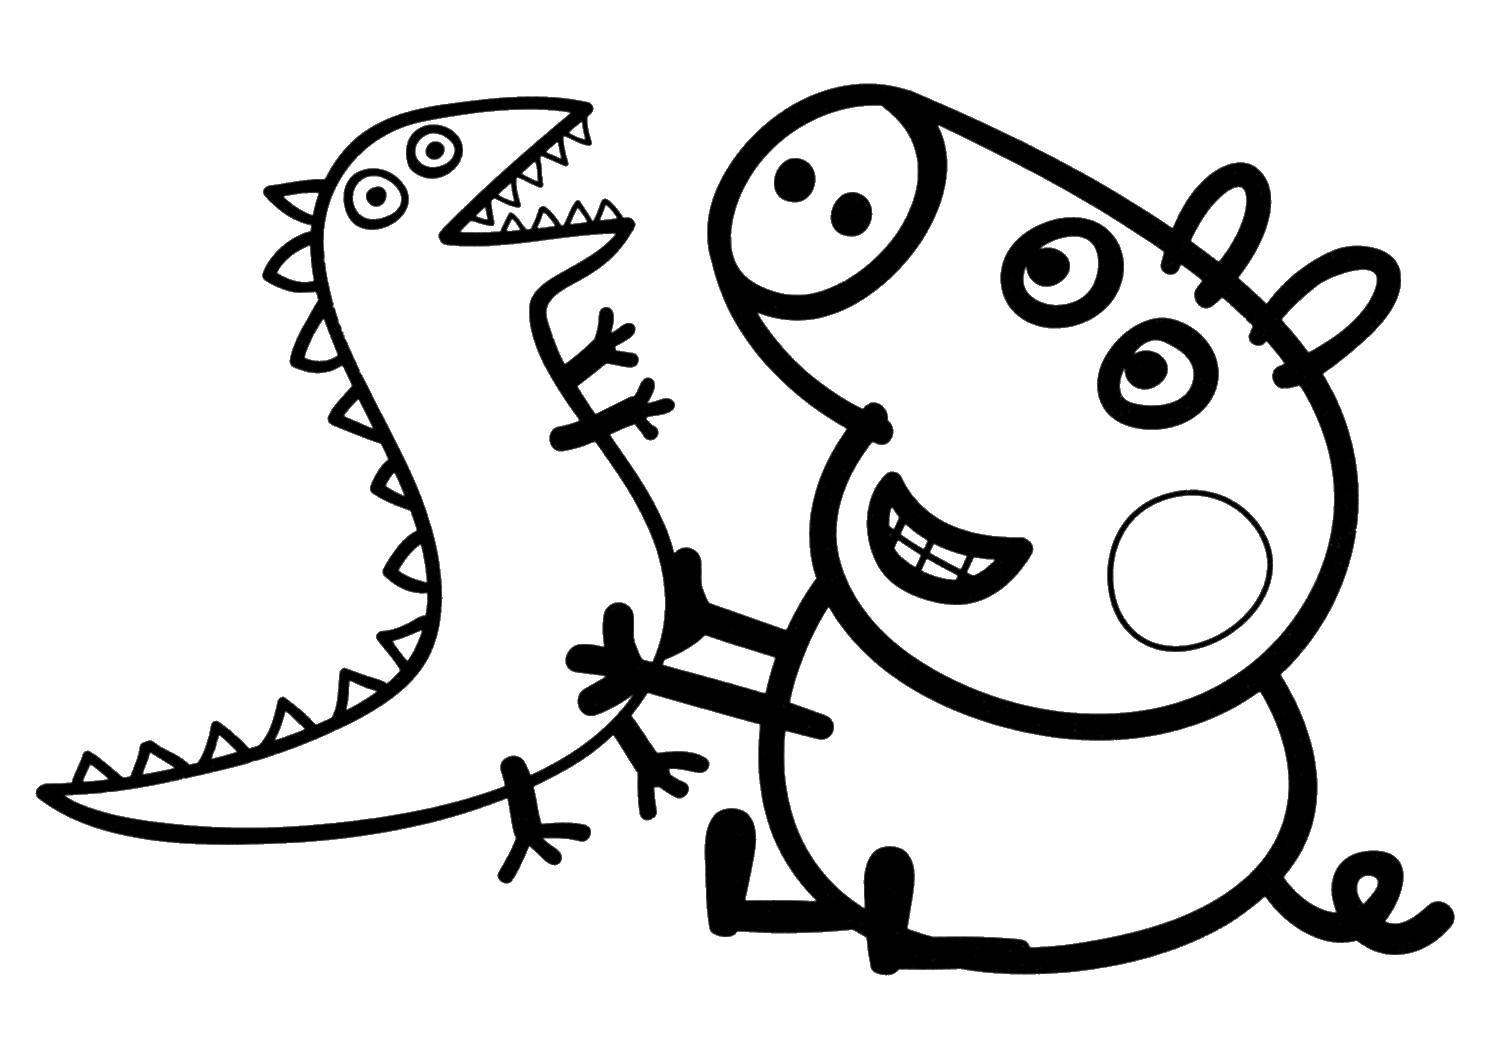 Coloring Josh with dinosaur. Category Peppa Pig. Tags:  Peppa Pig.